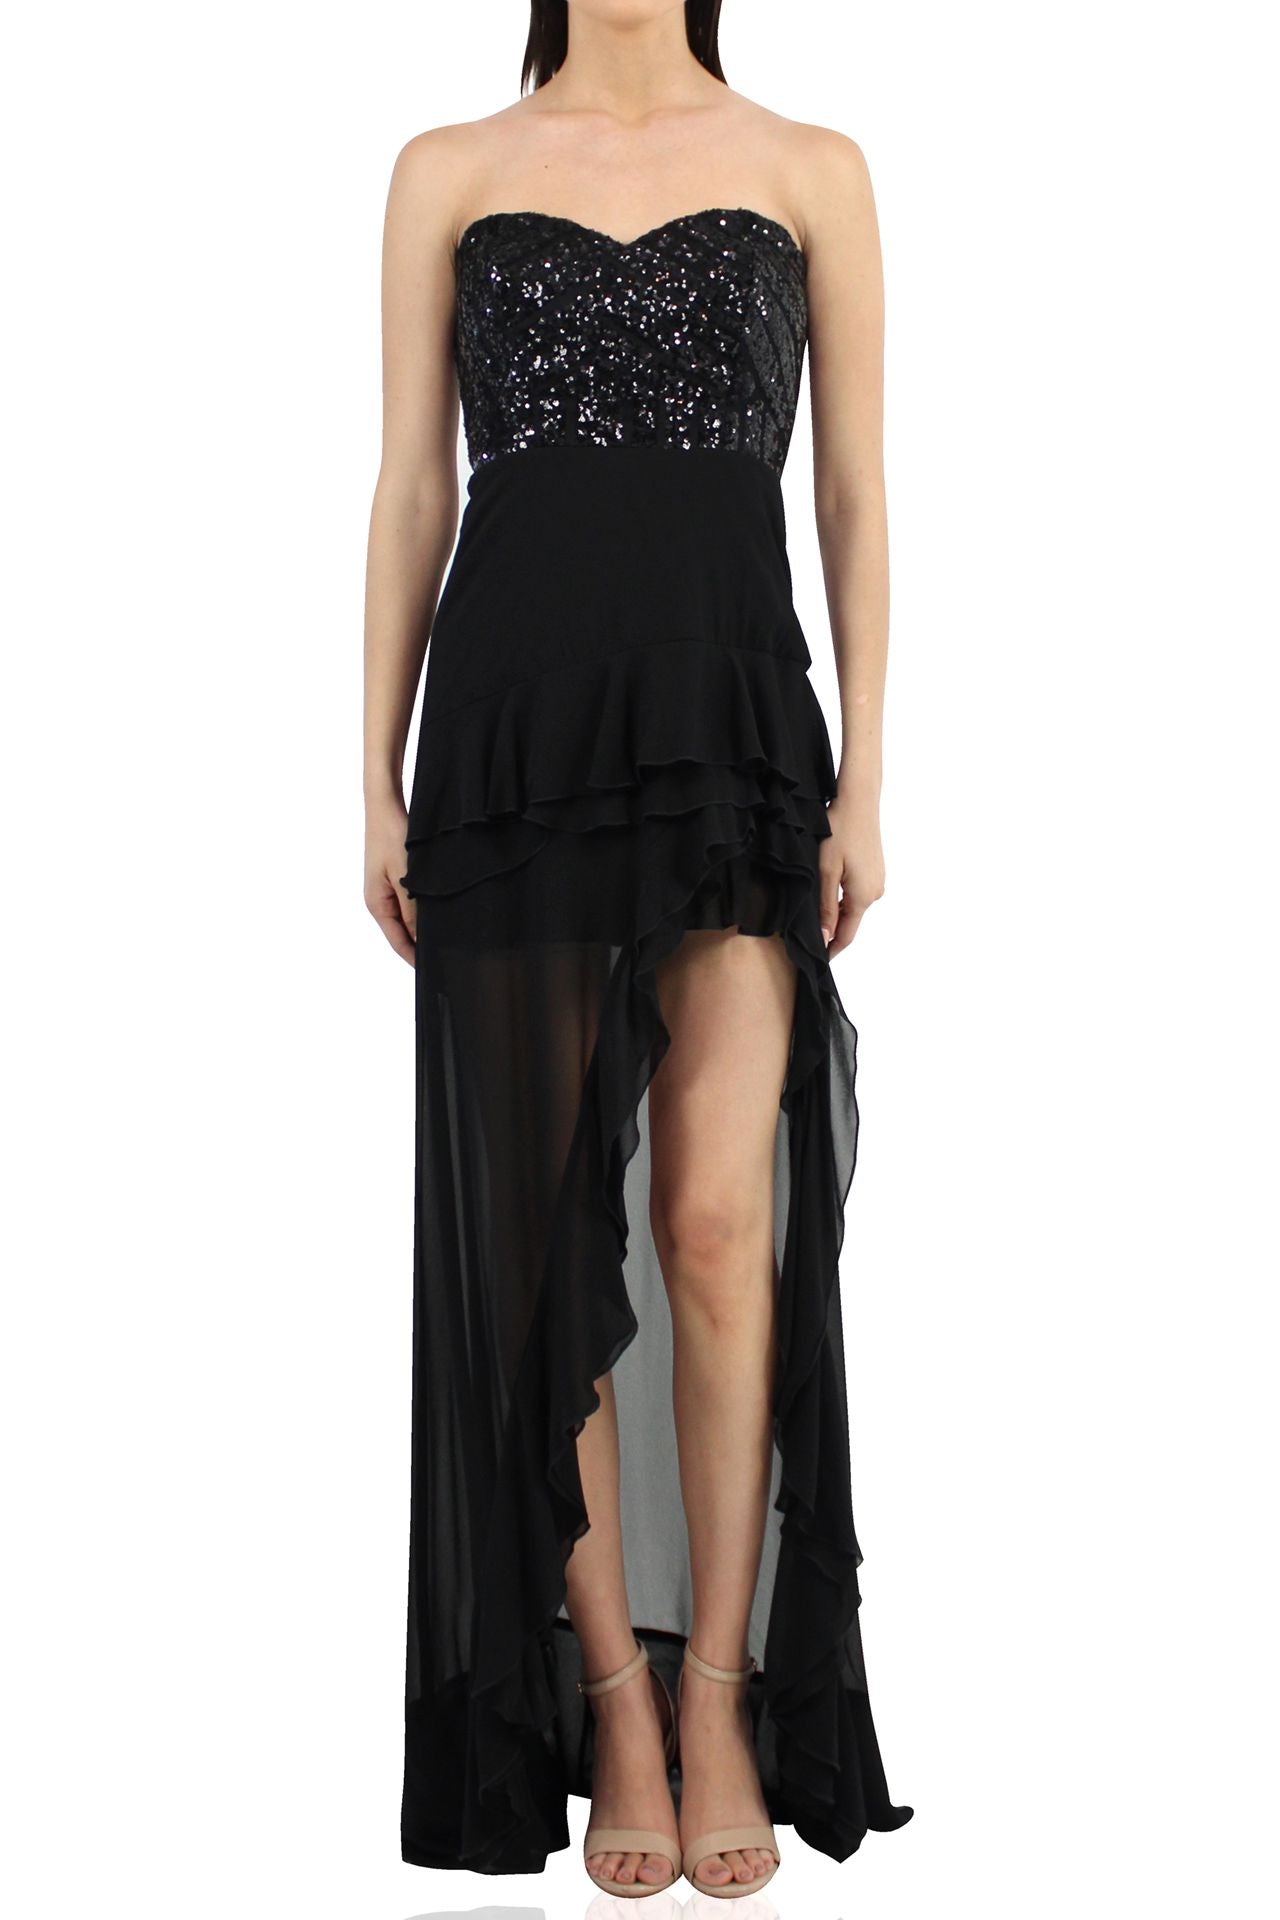 "sexy black sequin dress" "black prom dress sequin" "Kyle X Shahida" "long black dress sequin"